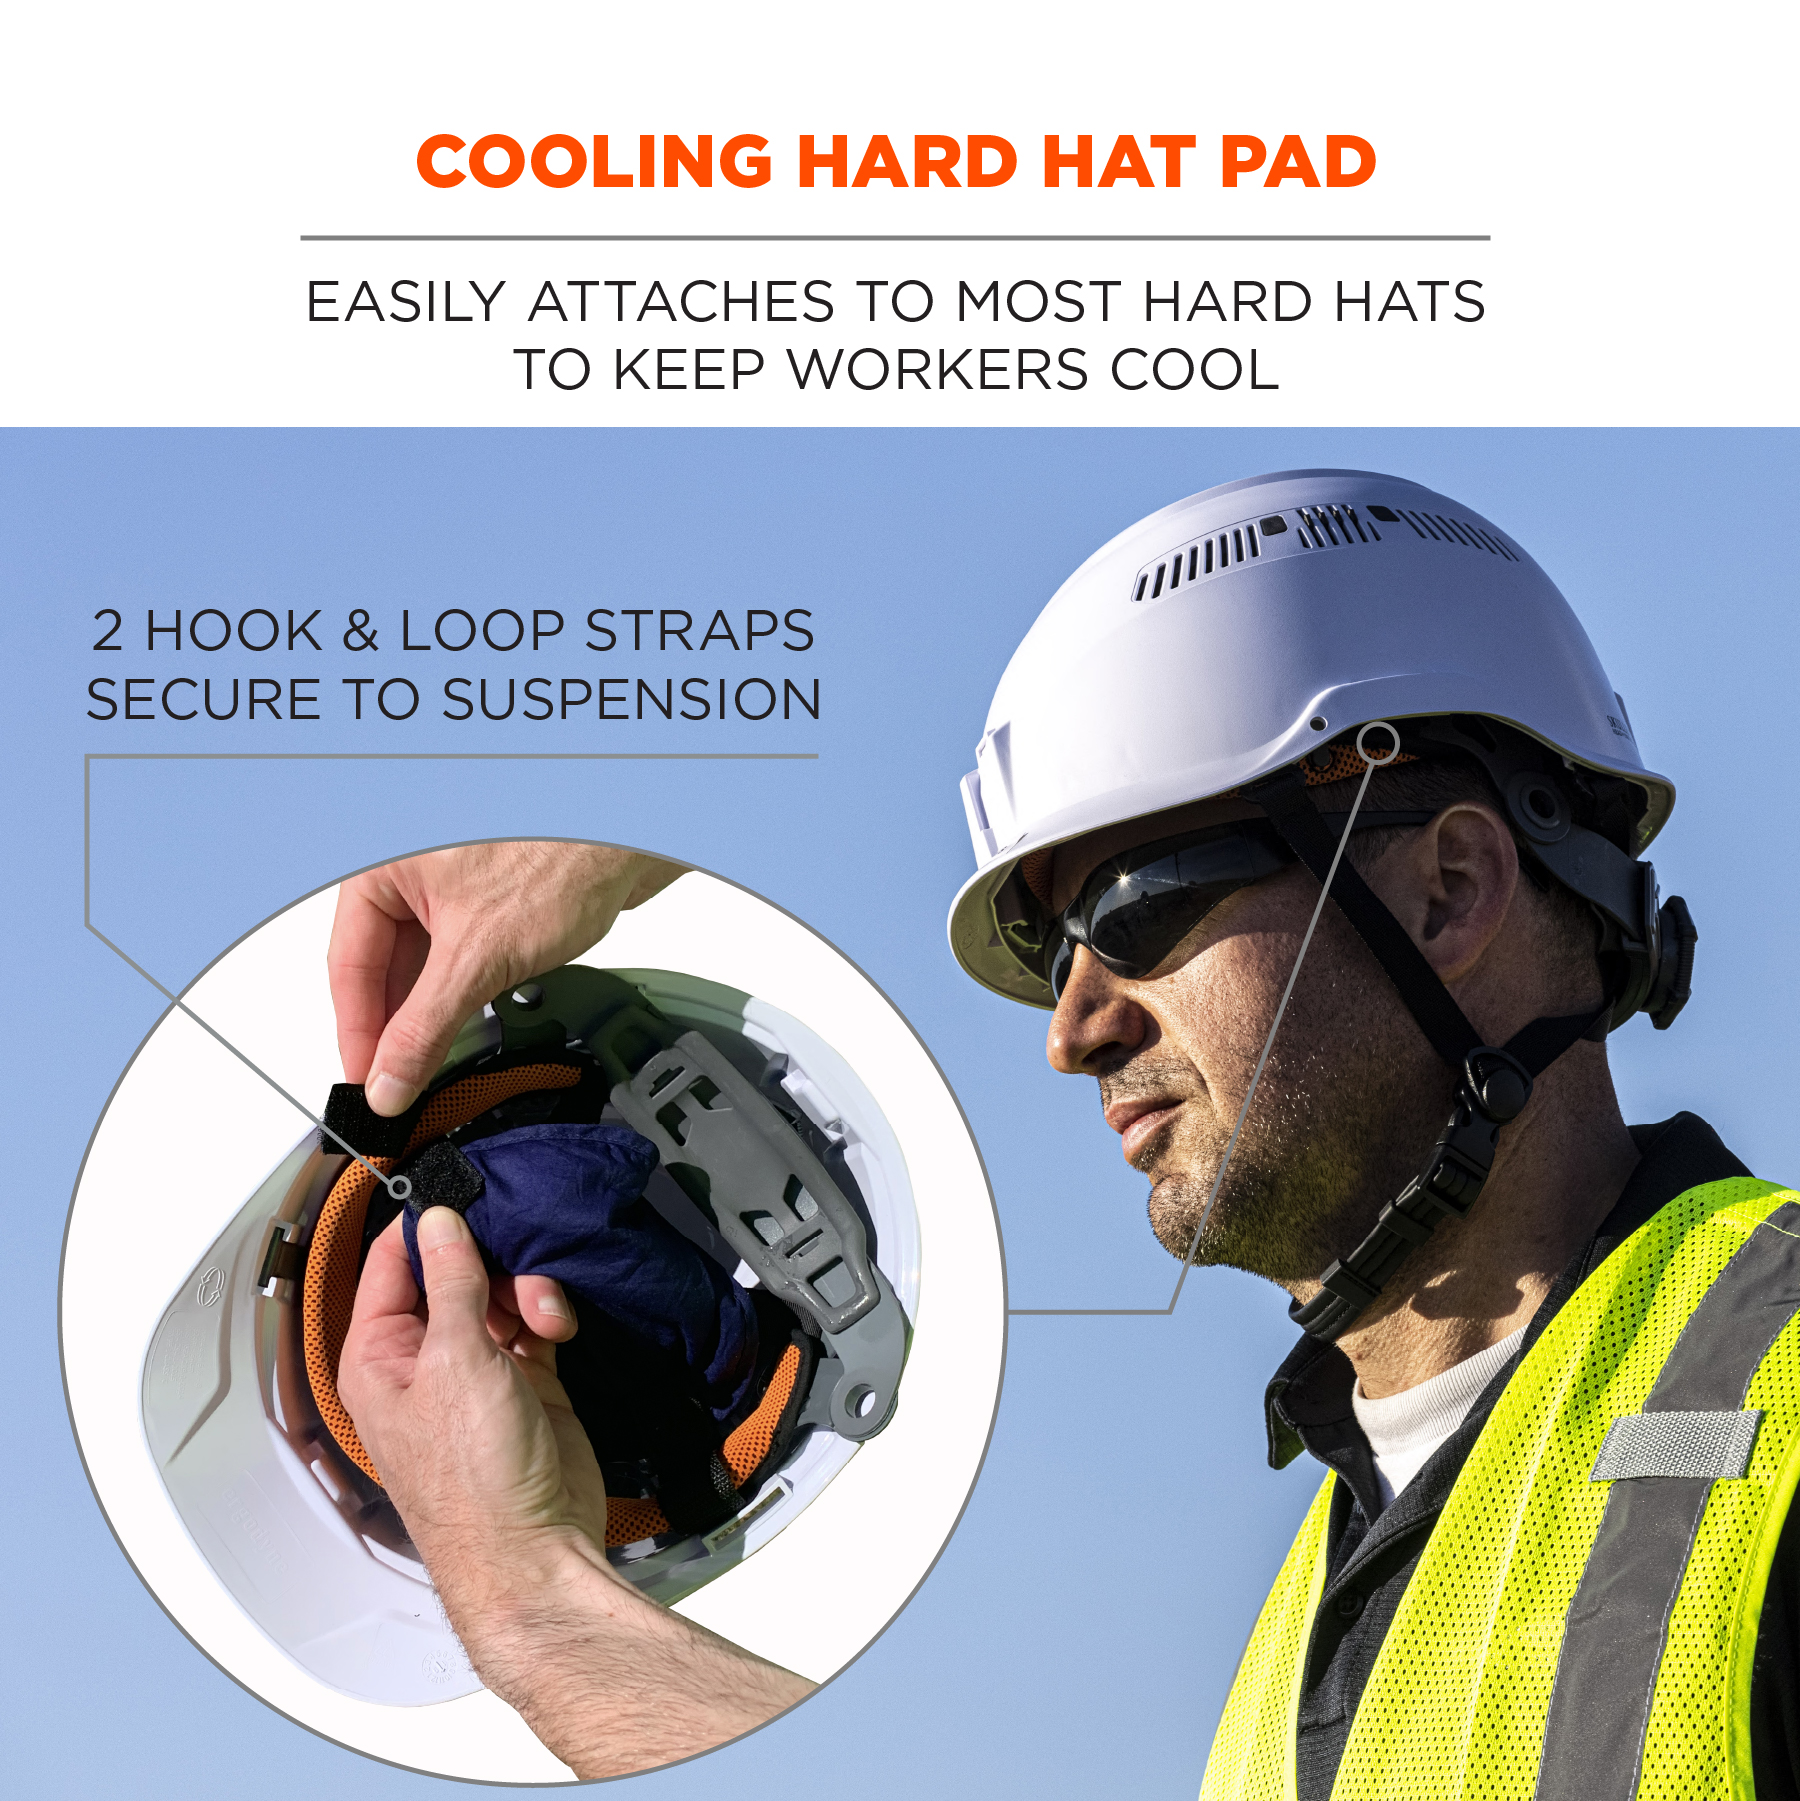 https://www.ergodyne.com/sites/default/files/product-images/12337-6715-cooling-hard-hat-pad-cooling-hard-hat-pad_0.jpg